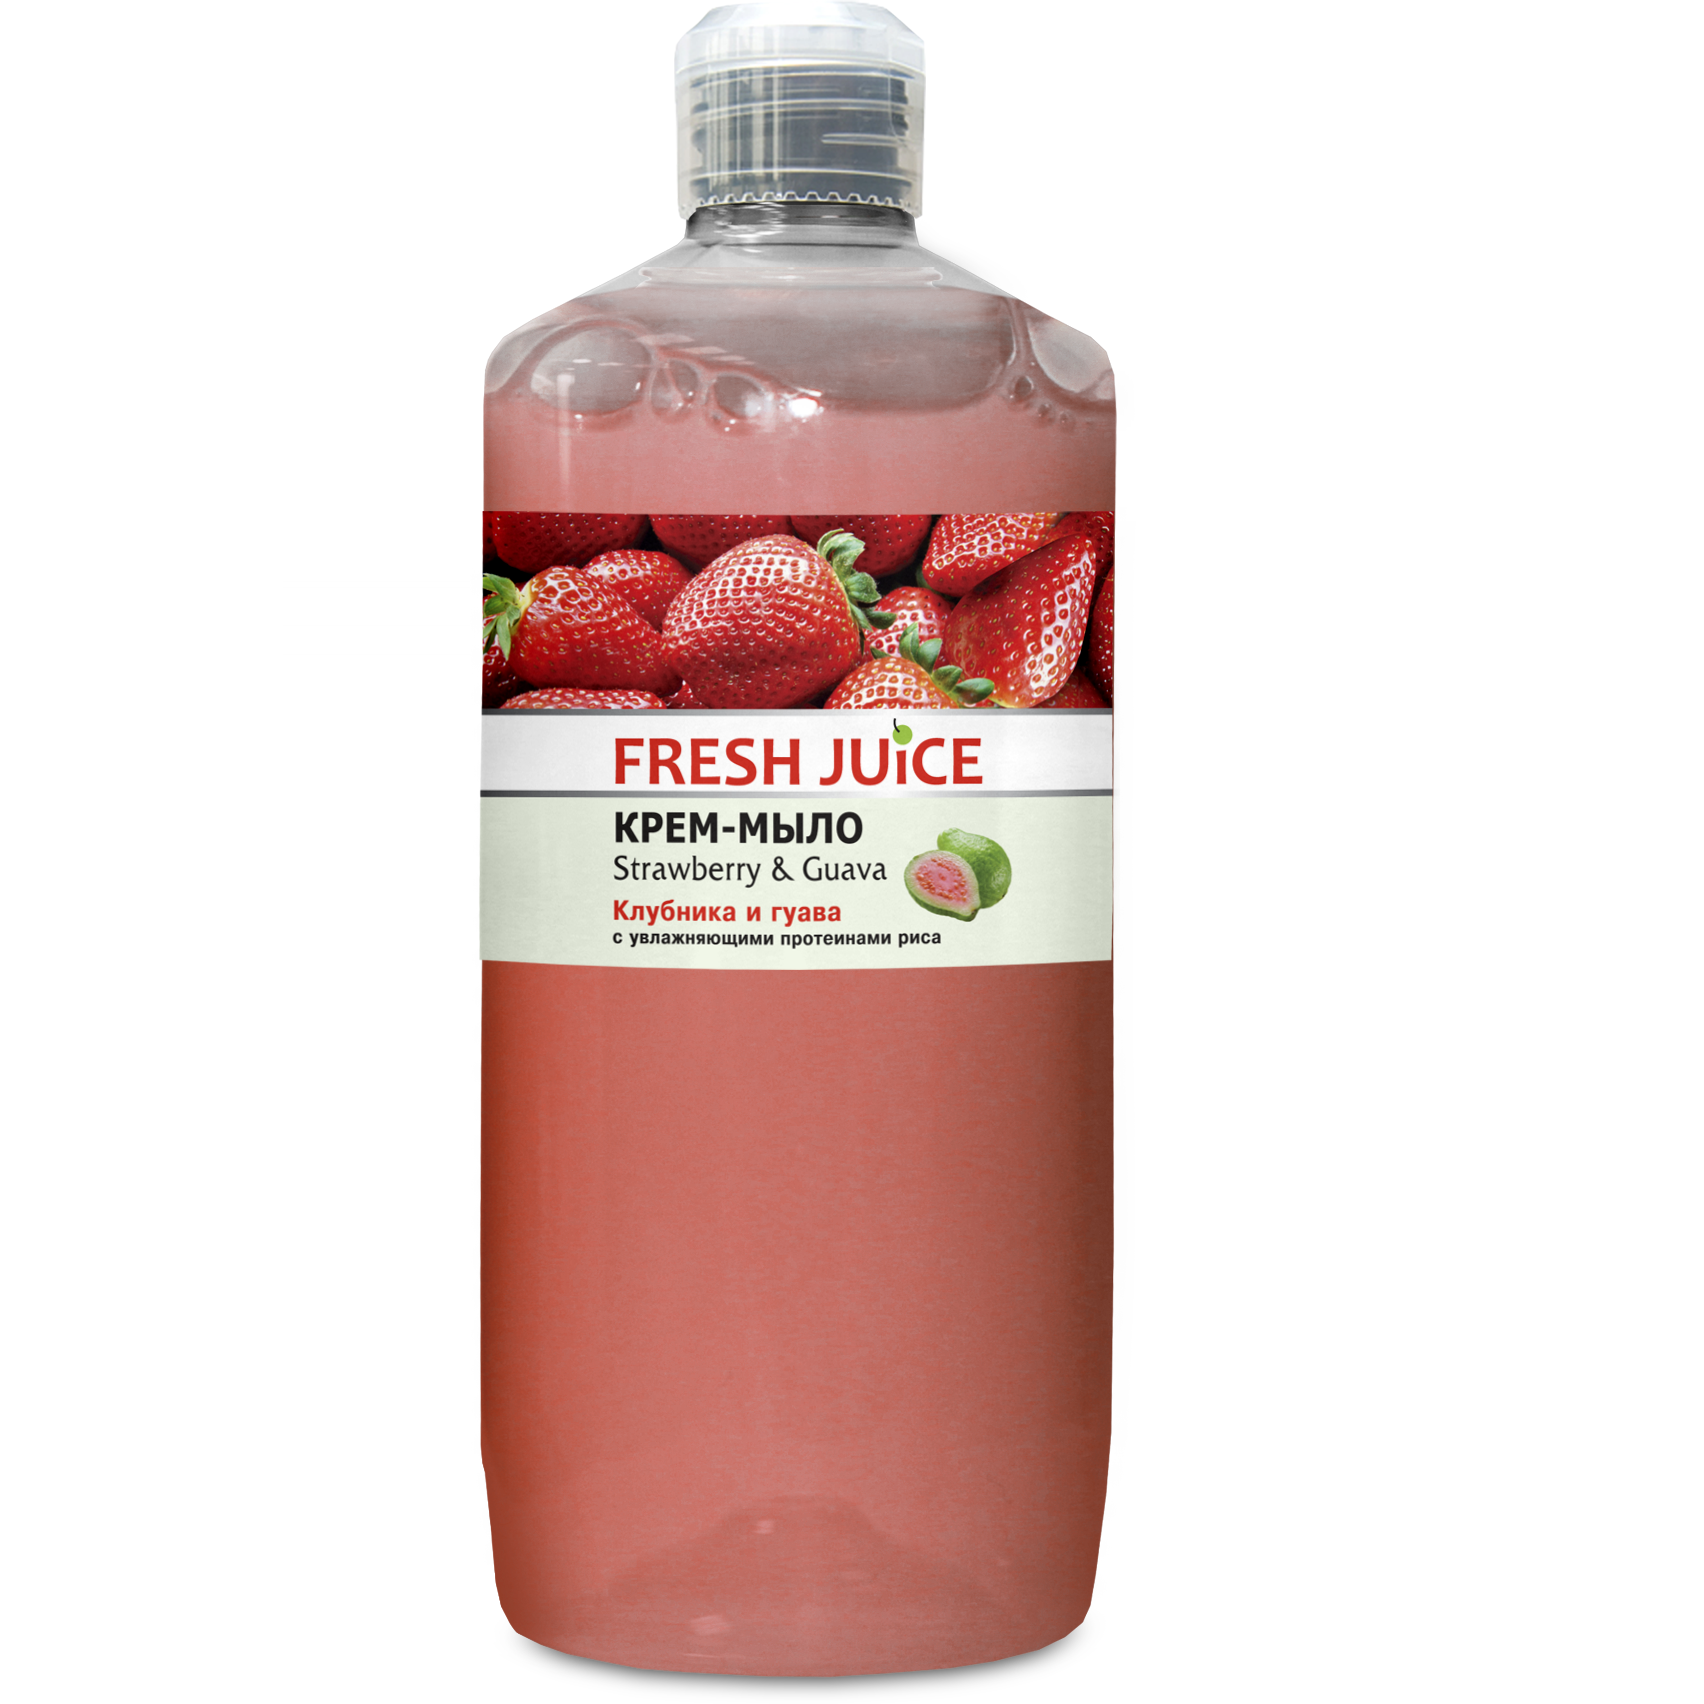 Крем-мило Fresh Juice Strawberry & Guava, 1 л. - фото 1